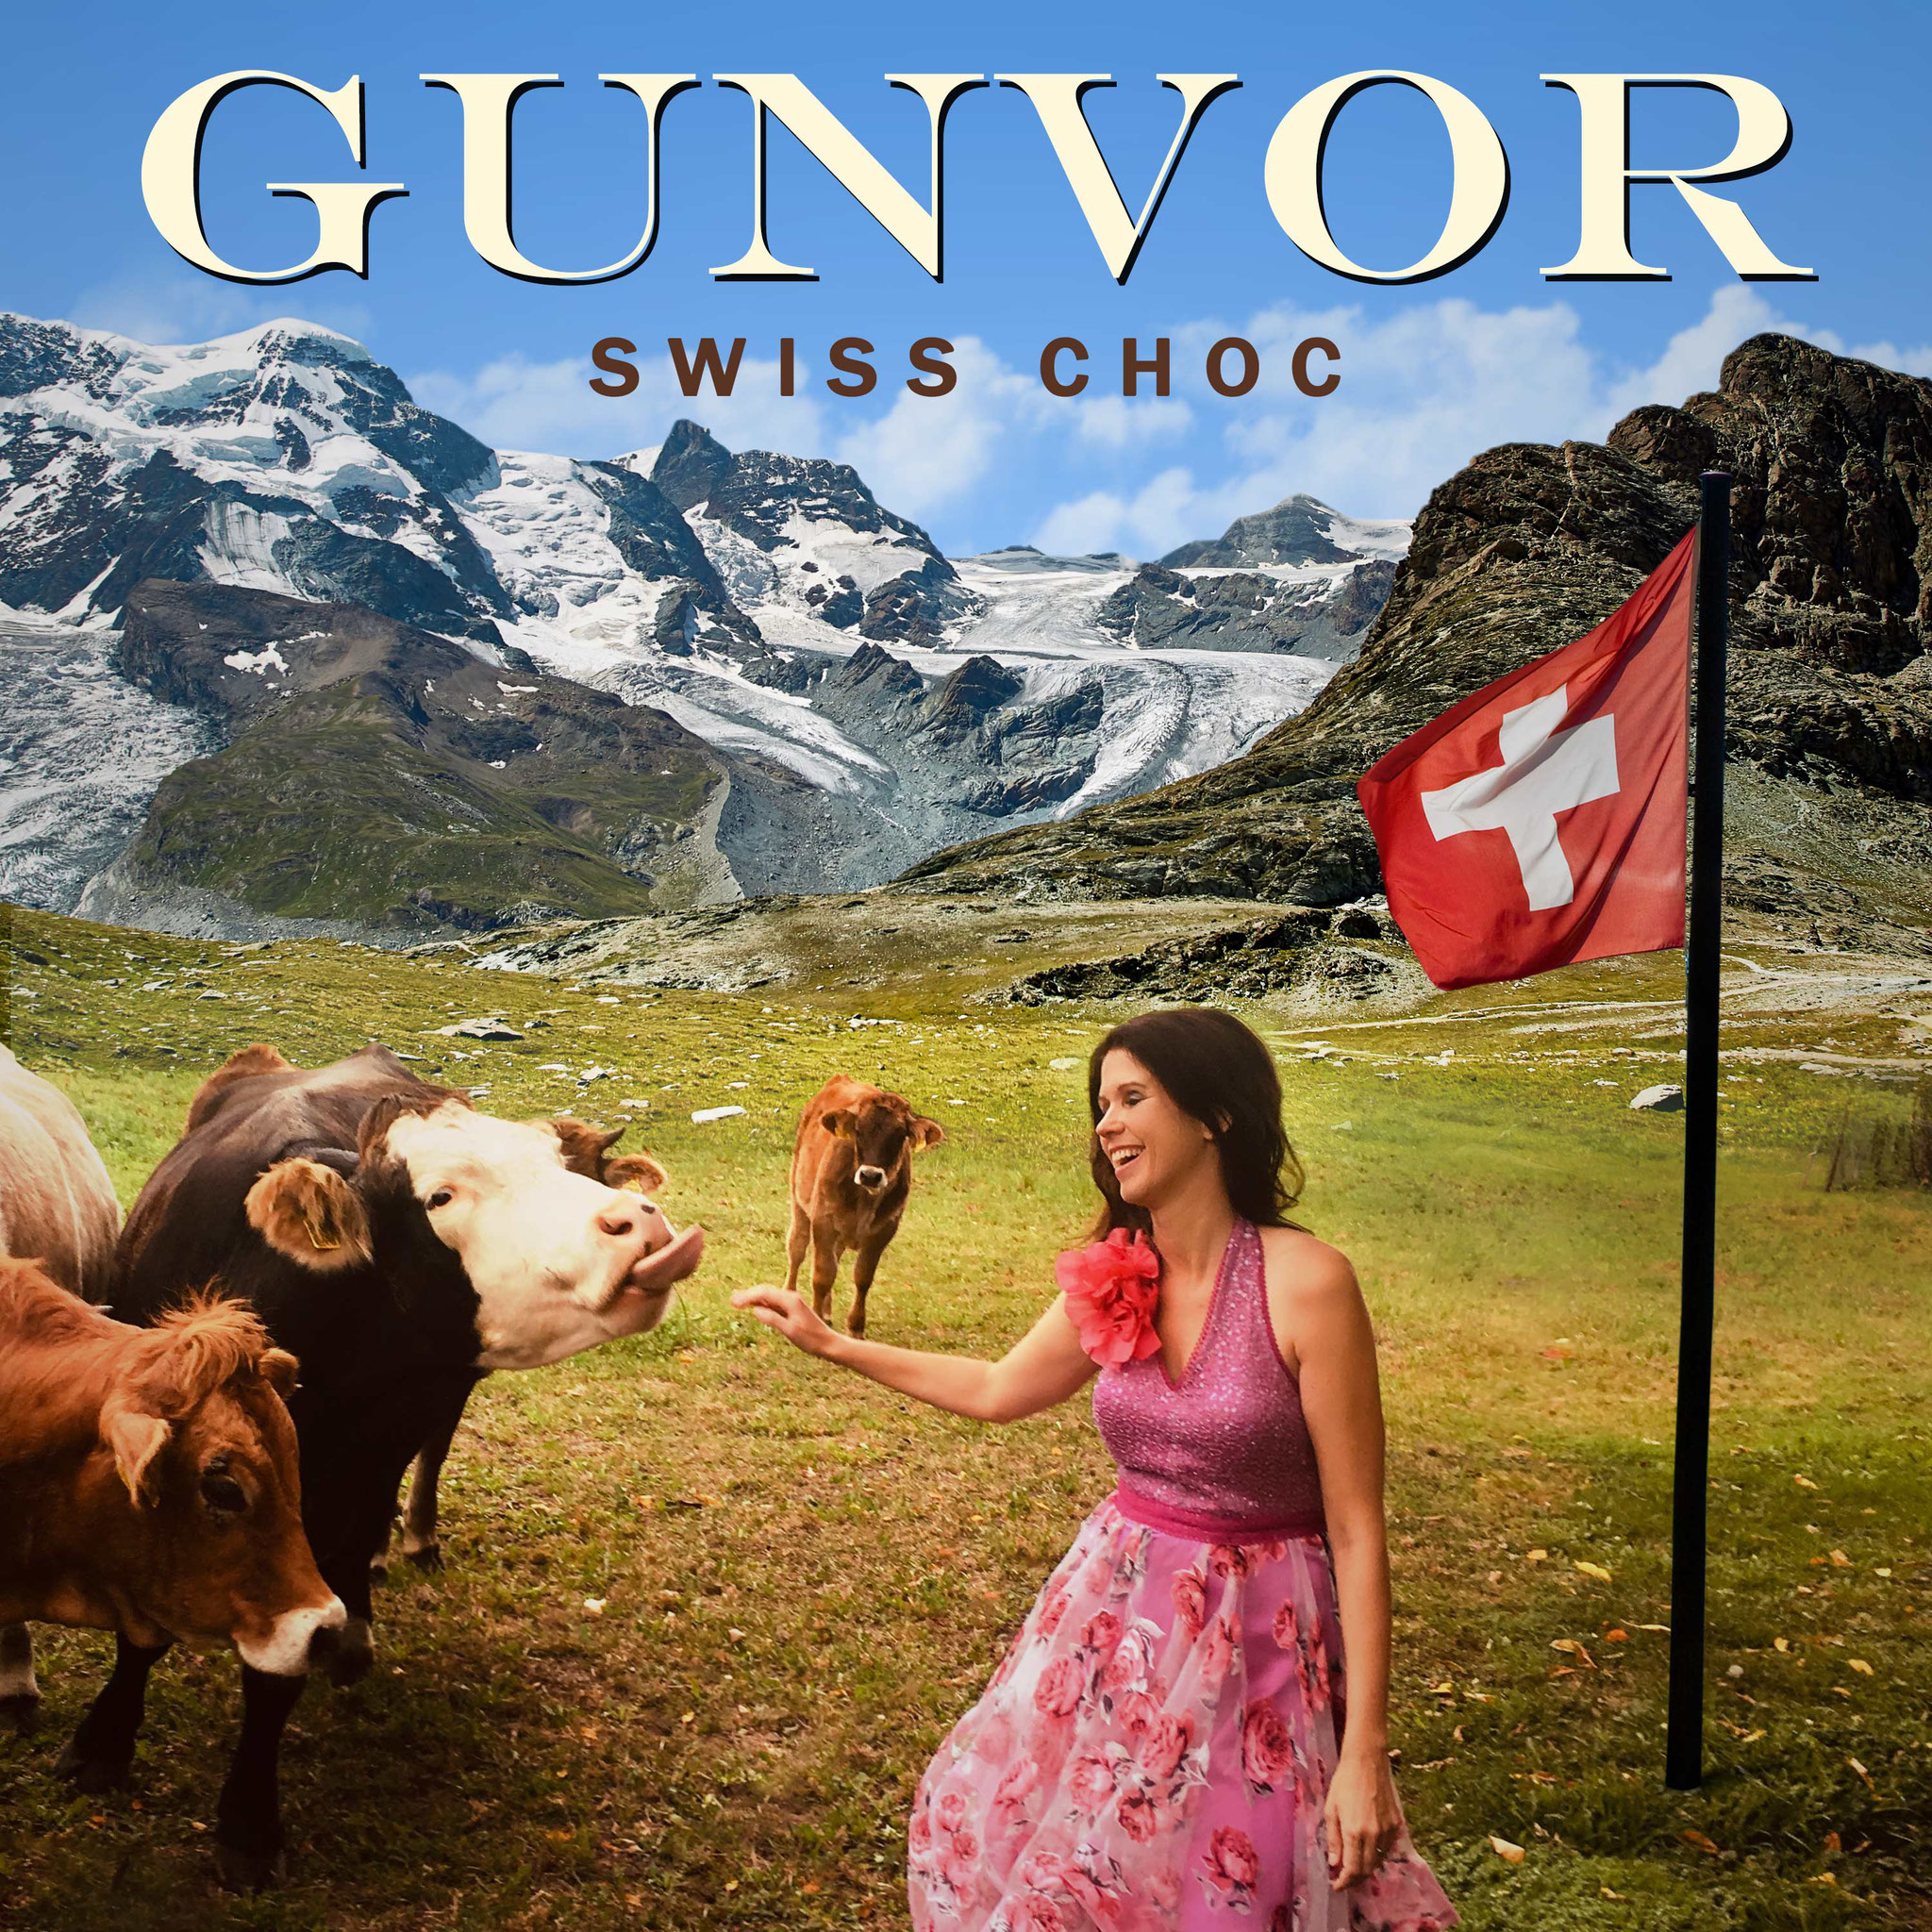 GUNVOR Swiss Choc